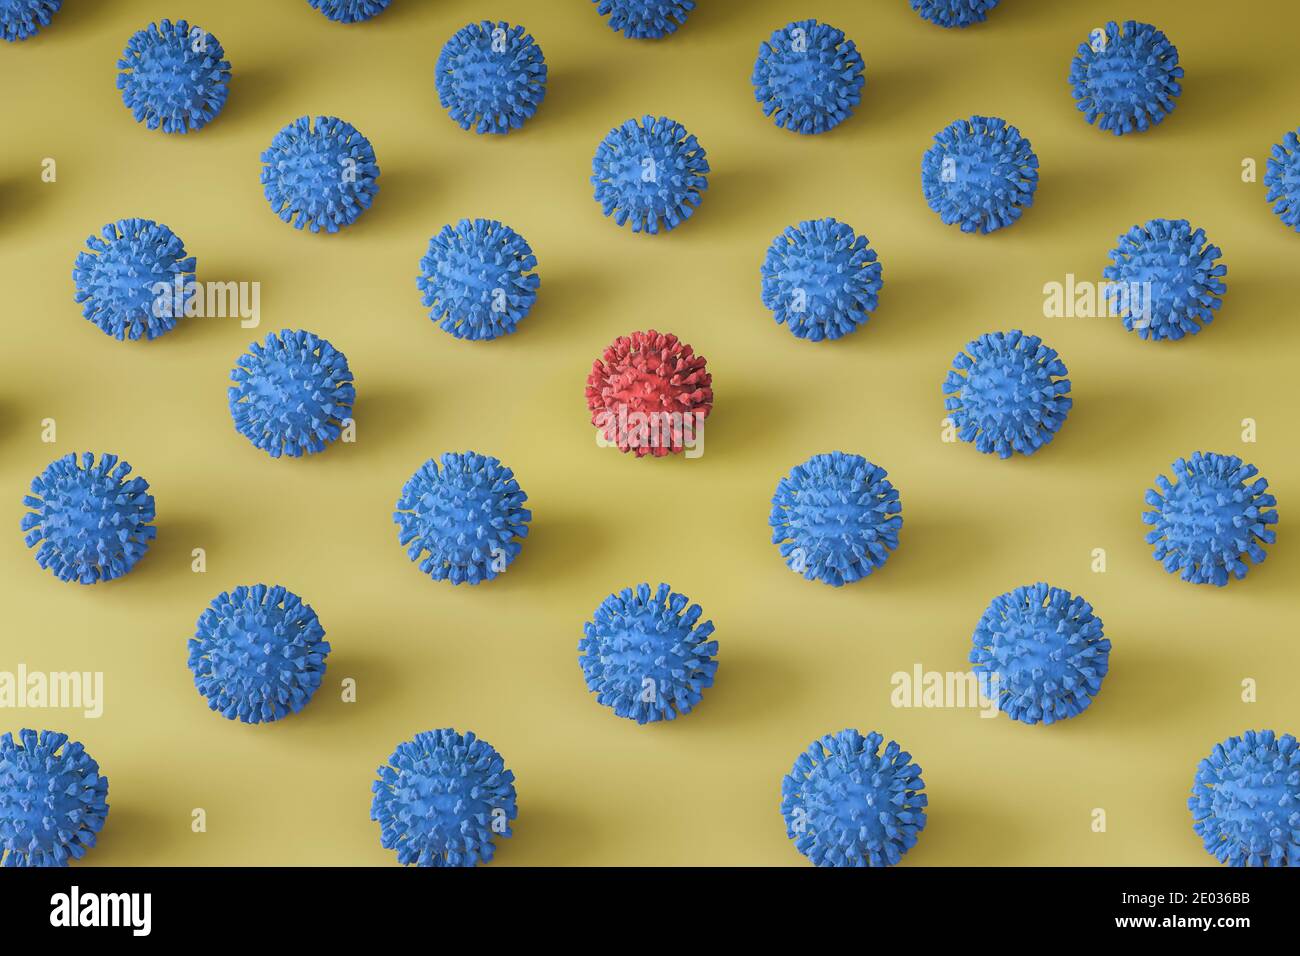 Coronavirus pattern 3d rendering. Illustration showing new strain of the virus. New variant of coronavirus Stock Photo